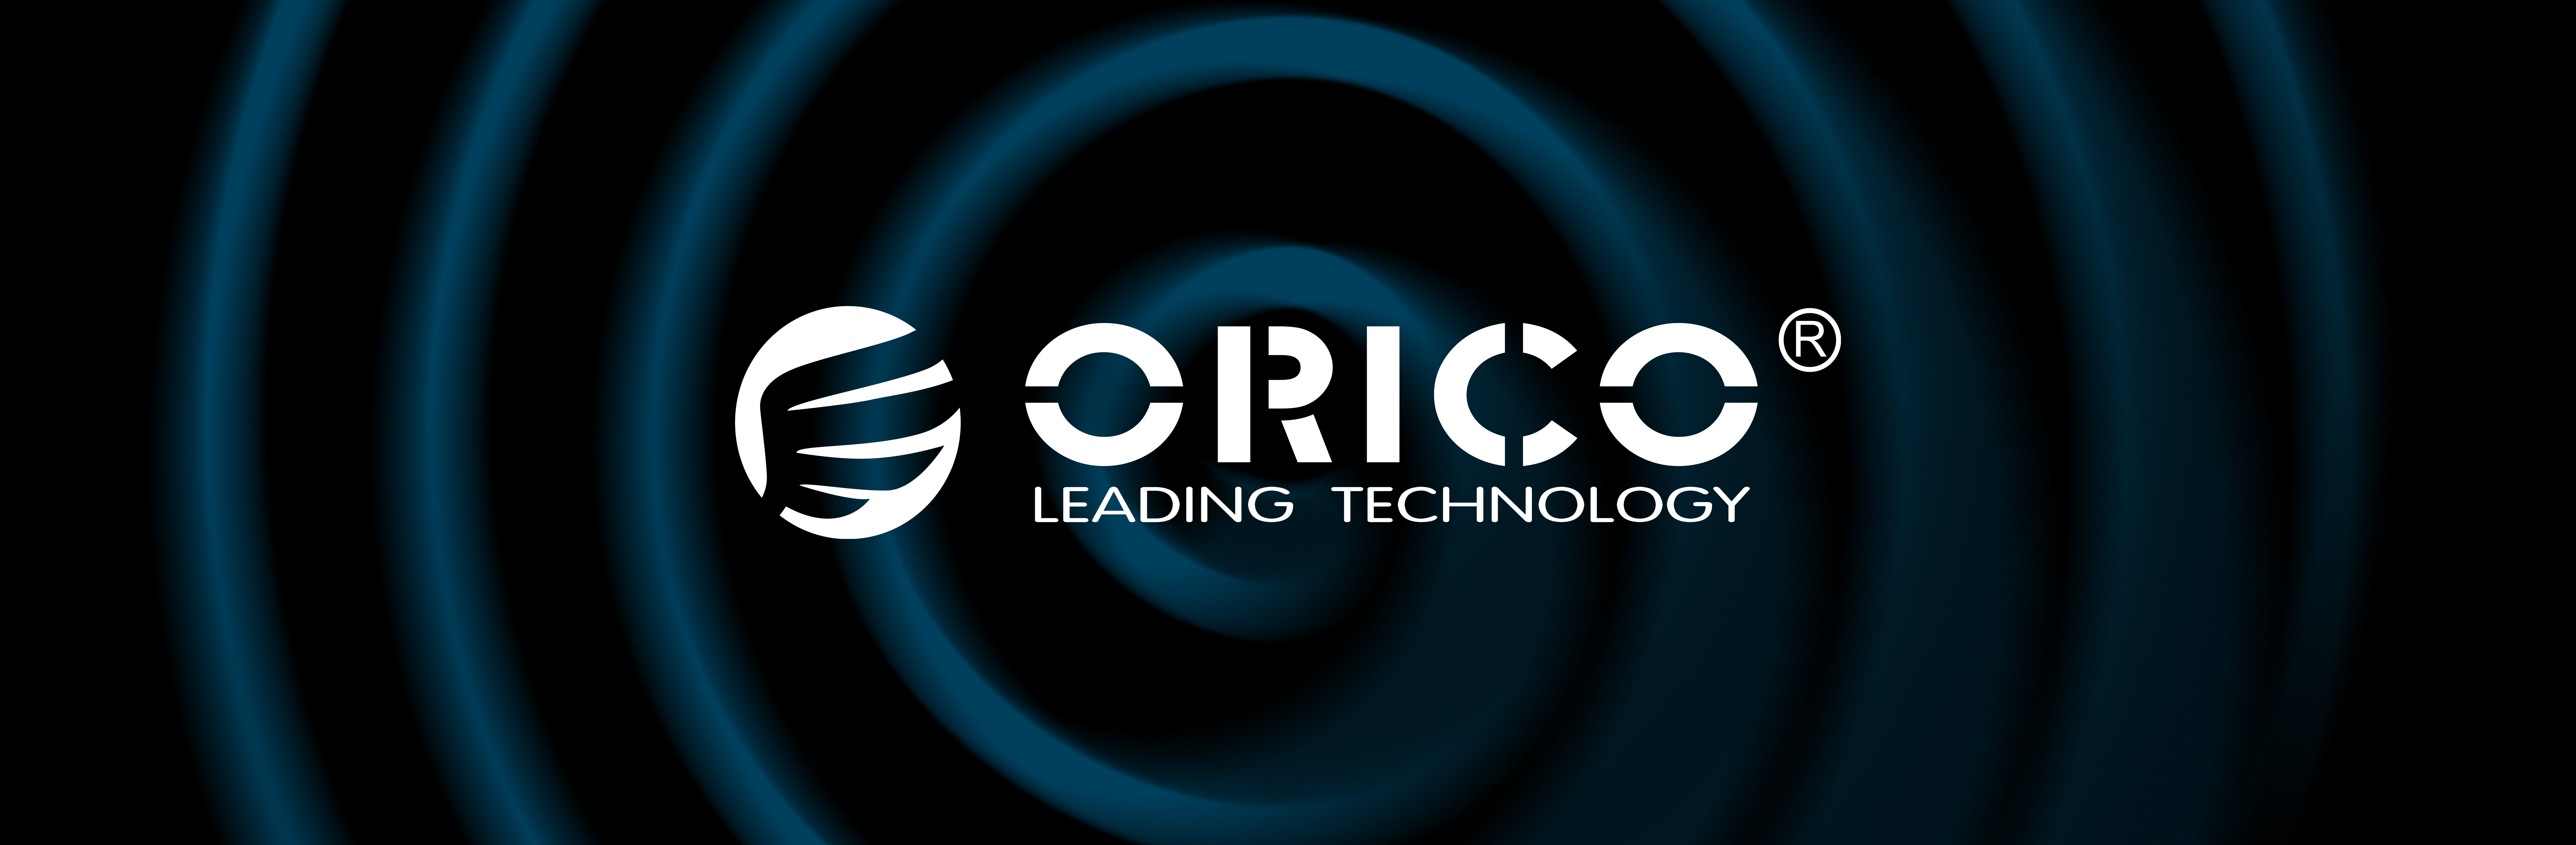 ORICO8.jpg